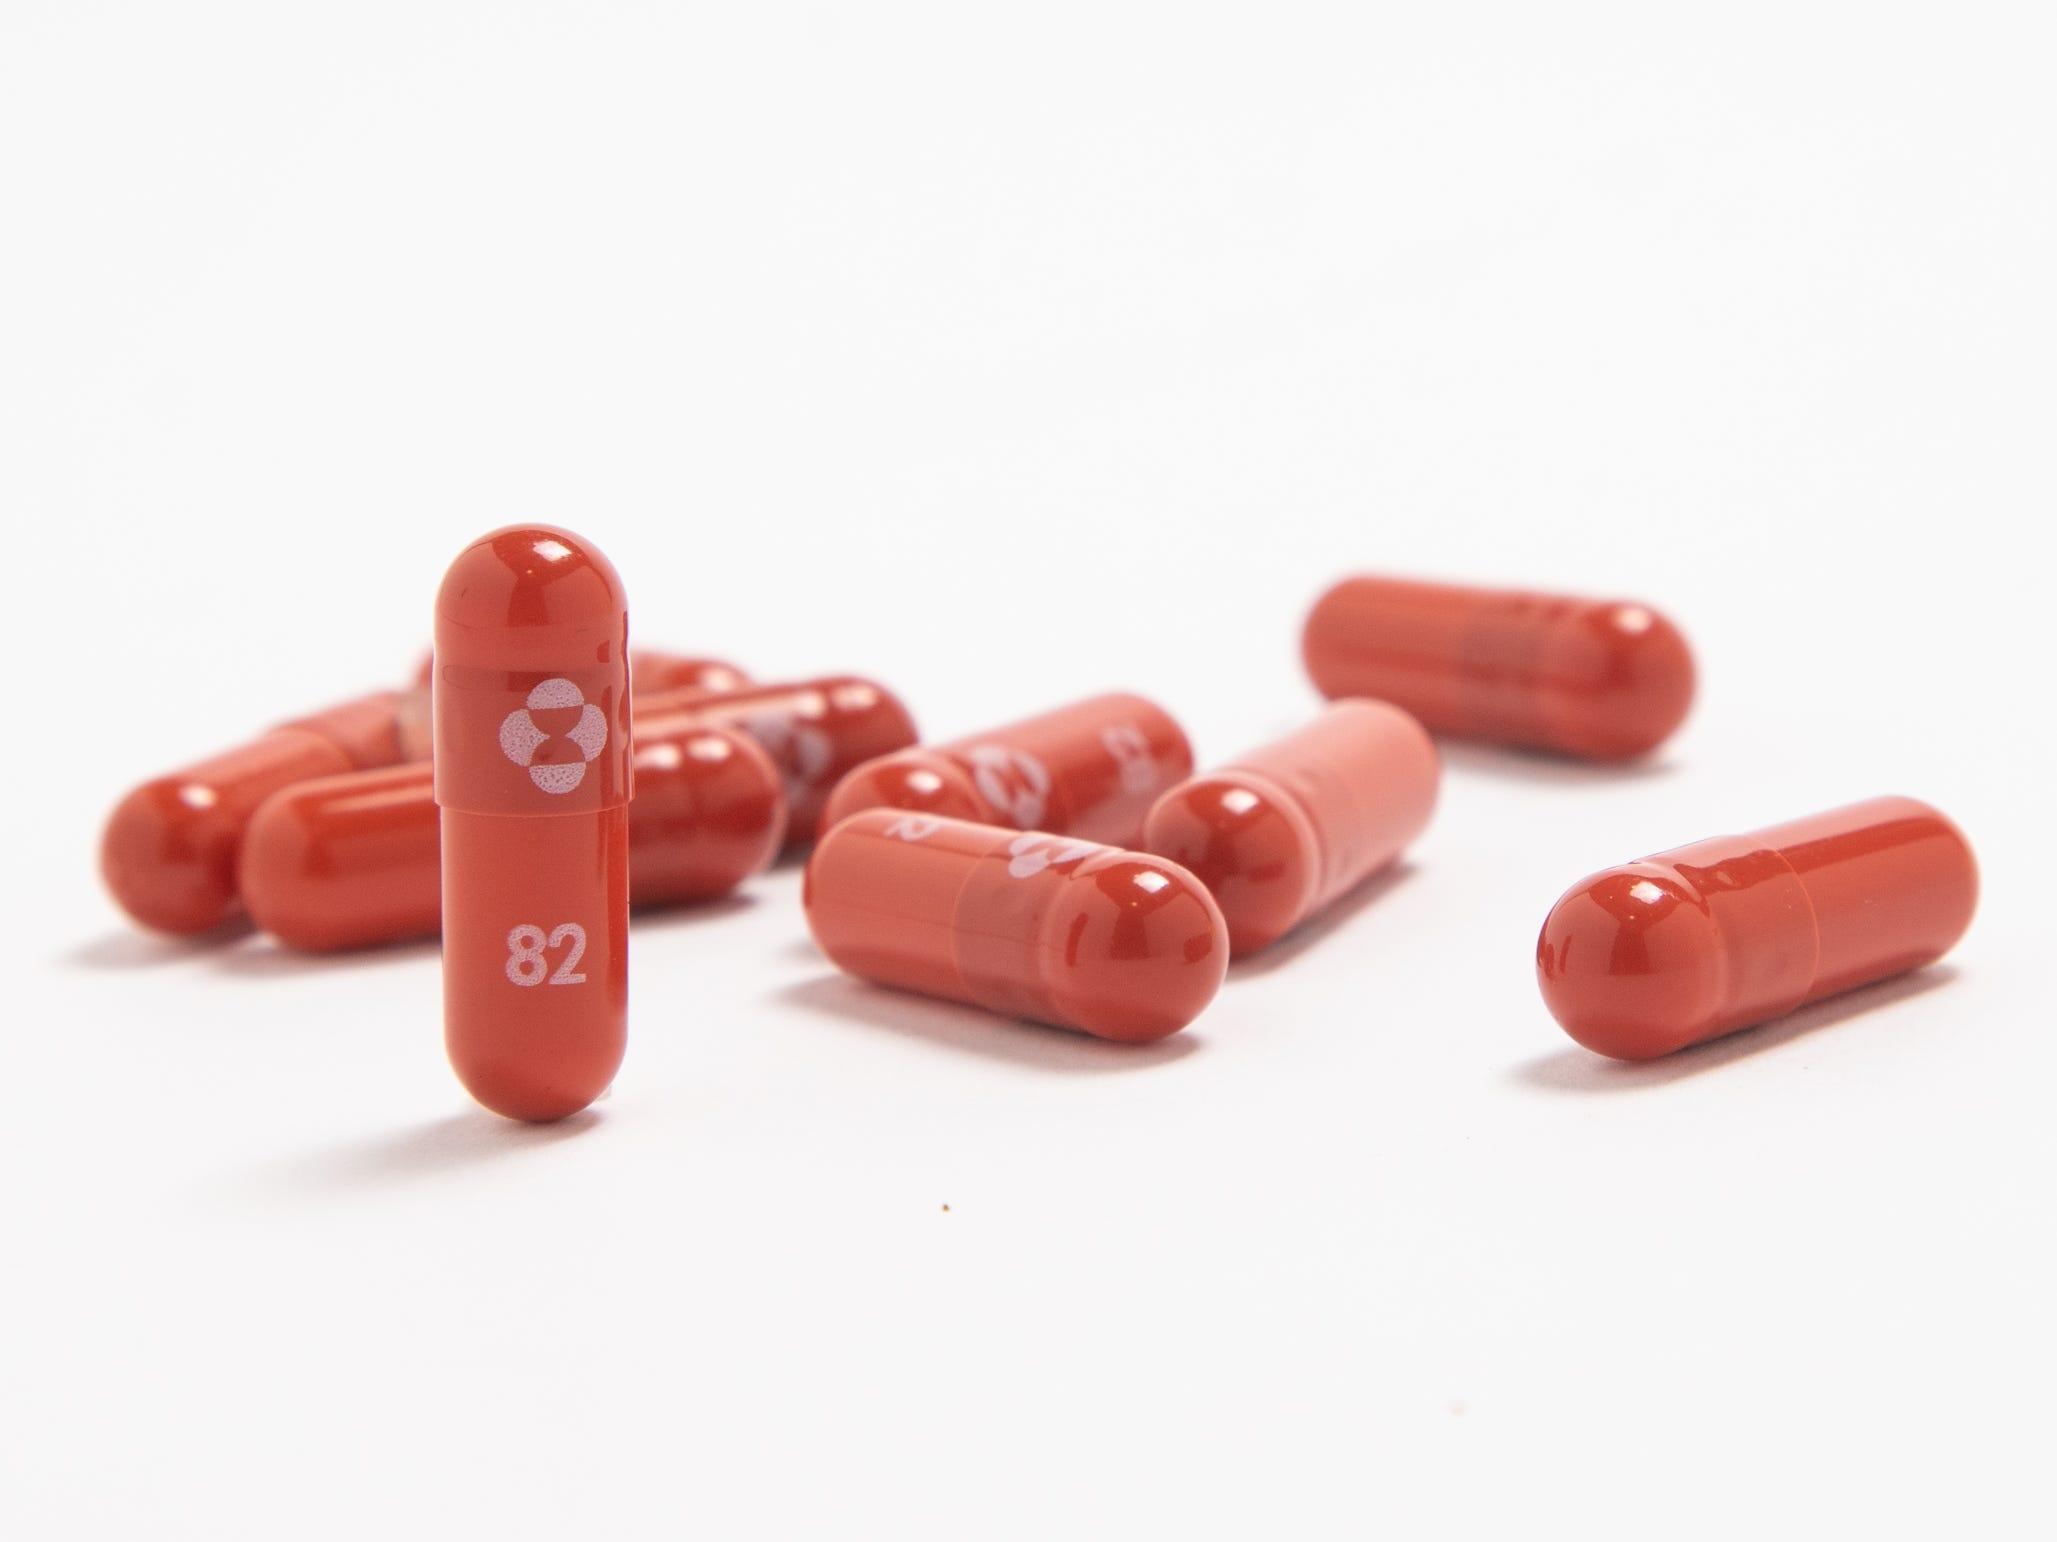 Merck pill seen as 'huge advance,' raises hope of preventing Covid-19 deaths